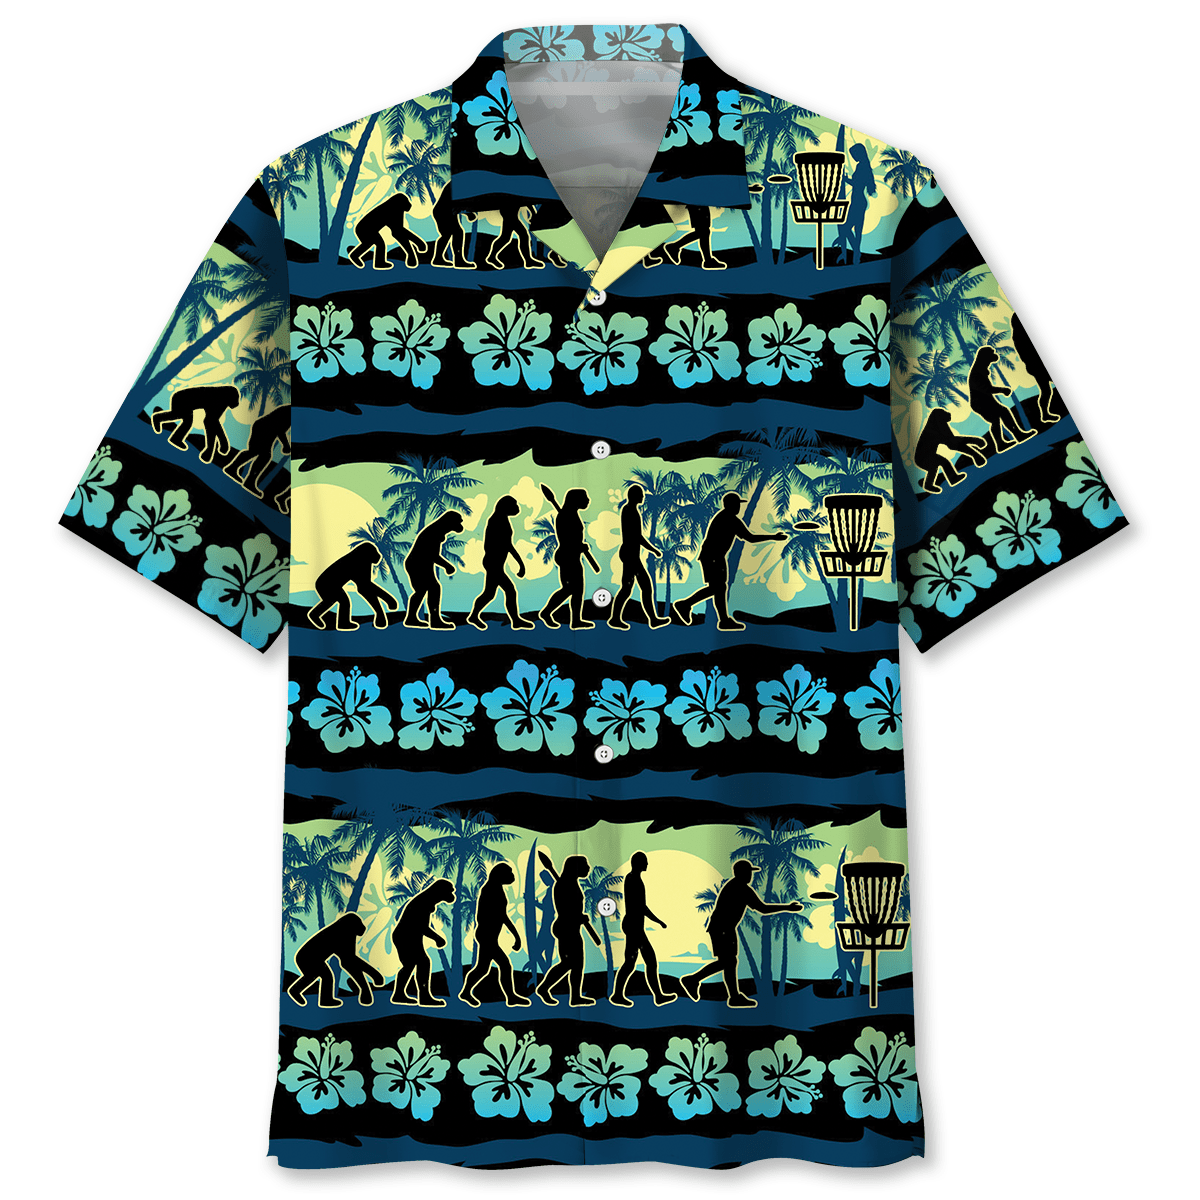 Disc Golf Evolution Hawaiian Shirt/ Beach Aloha Hawaii Shirt for Disc Golf